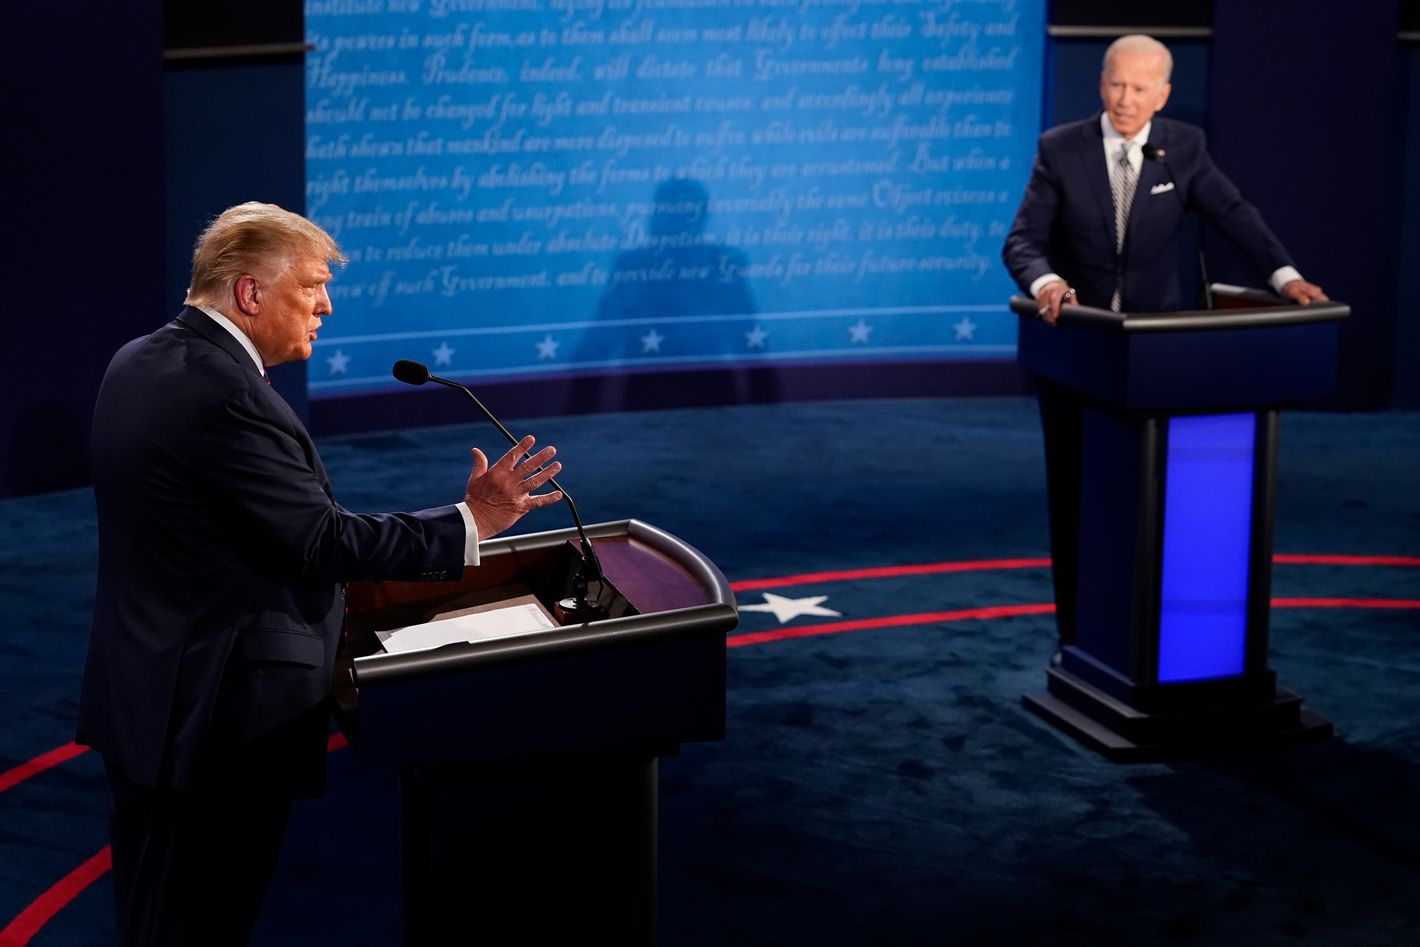 Trump Let Biden Take First Swing by Agreeing to Debate